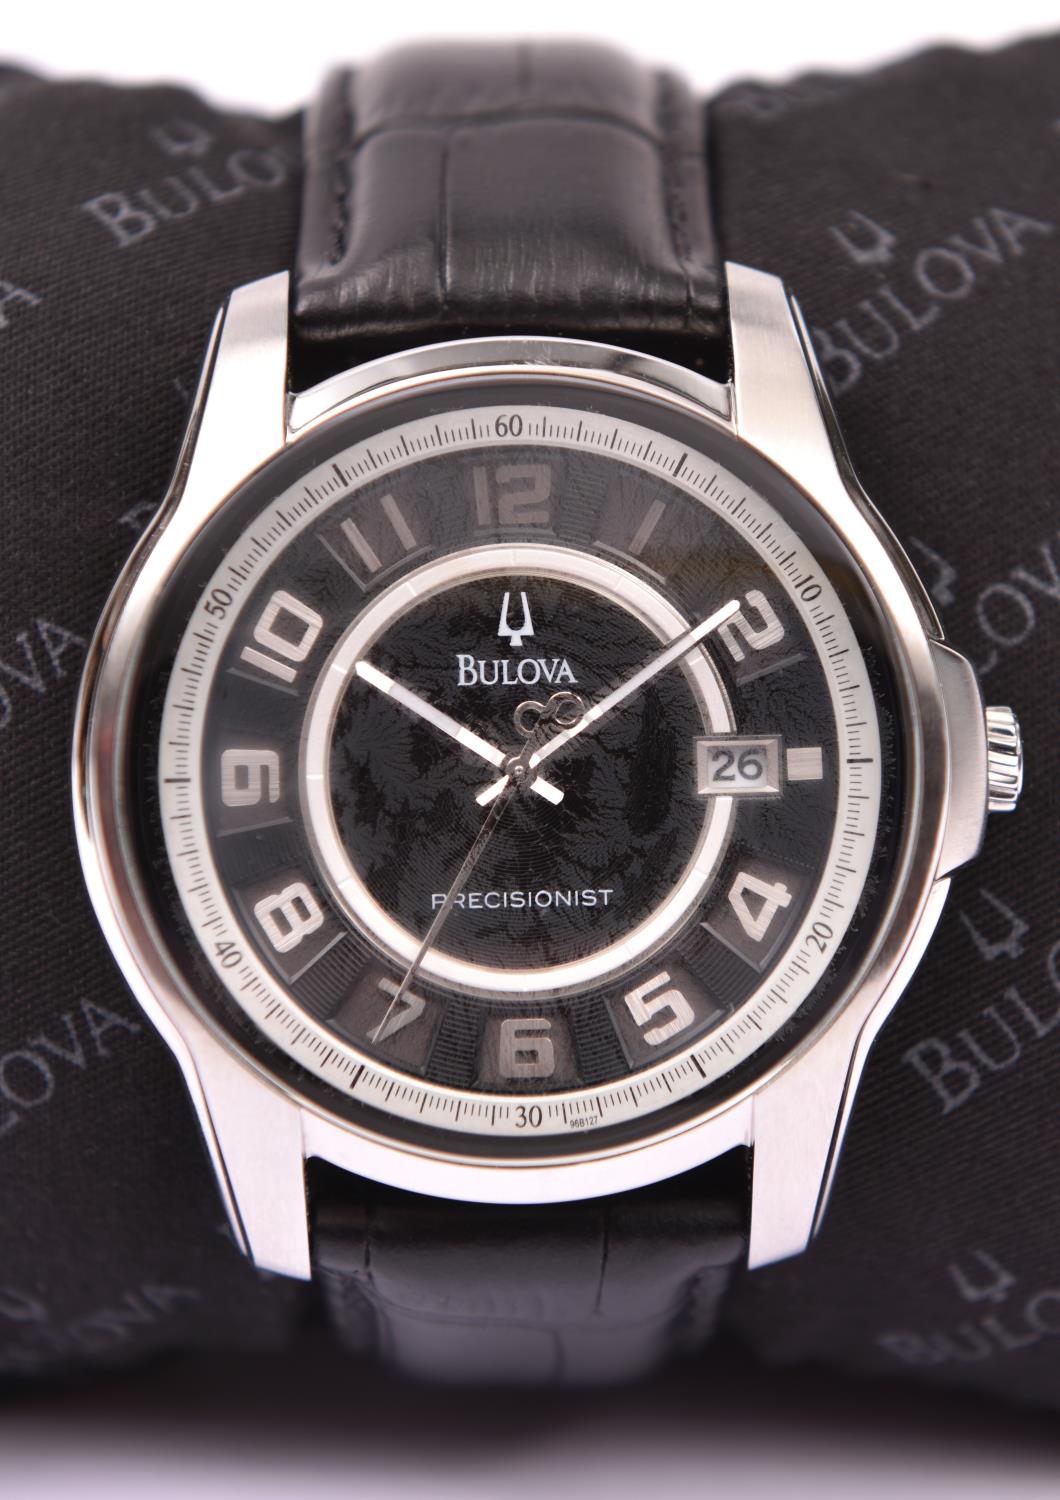 A Bulova B2 Precisionist quartz watch. Stainless steel case, metallic black face and silver Arabic